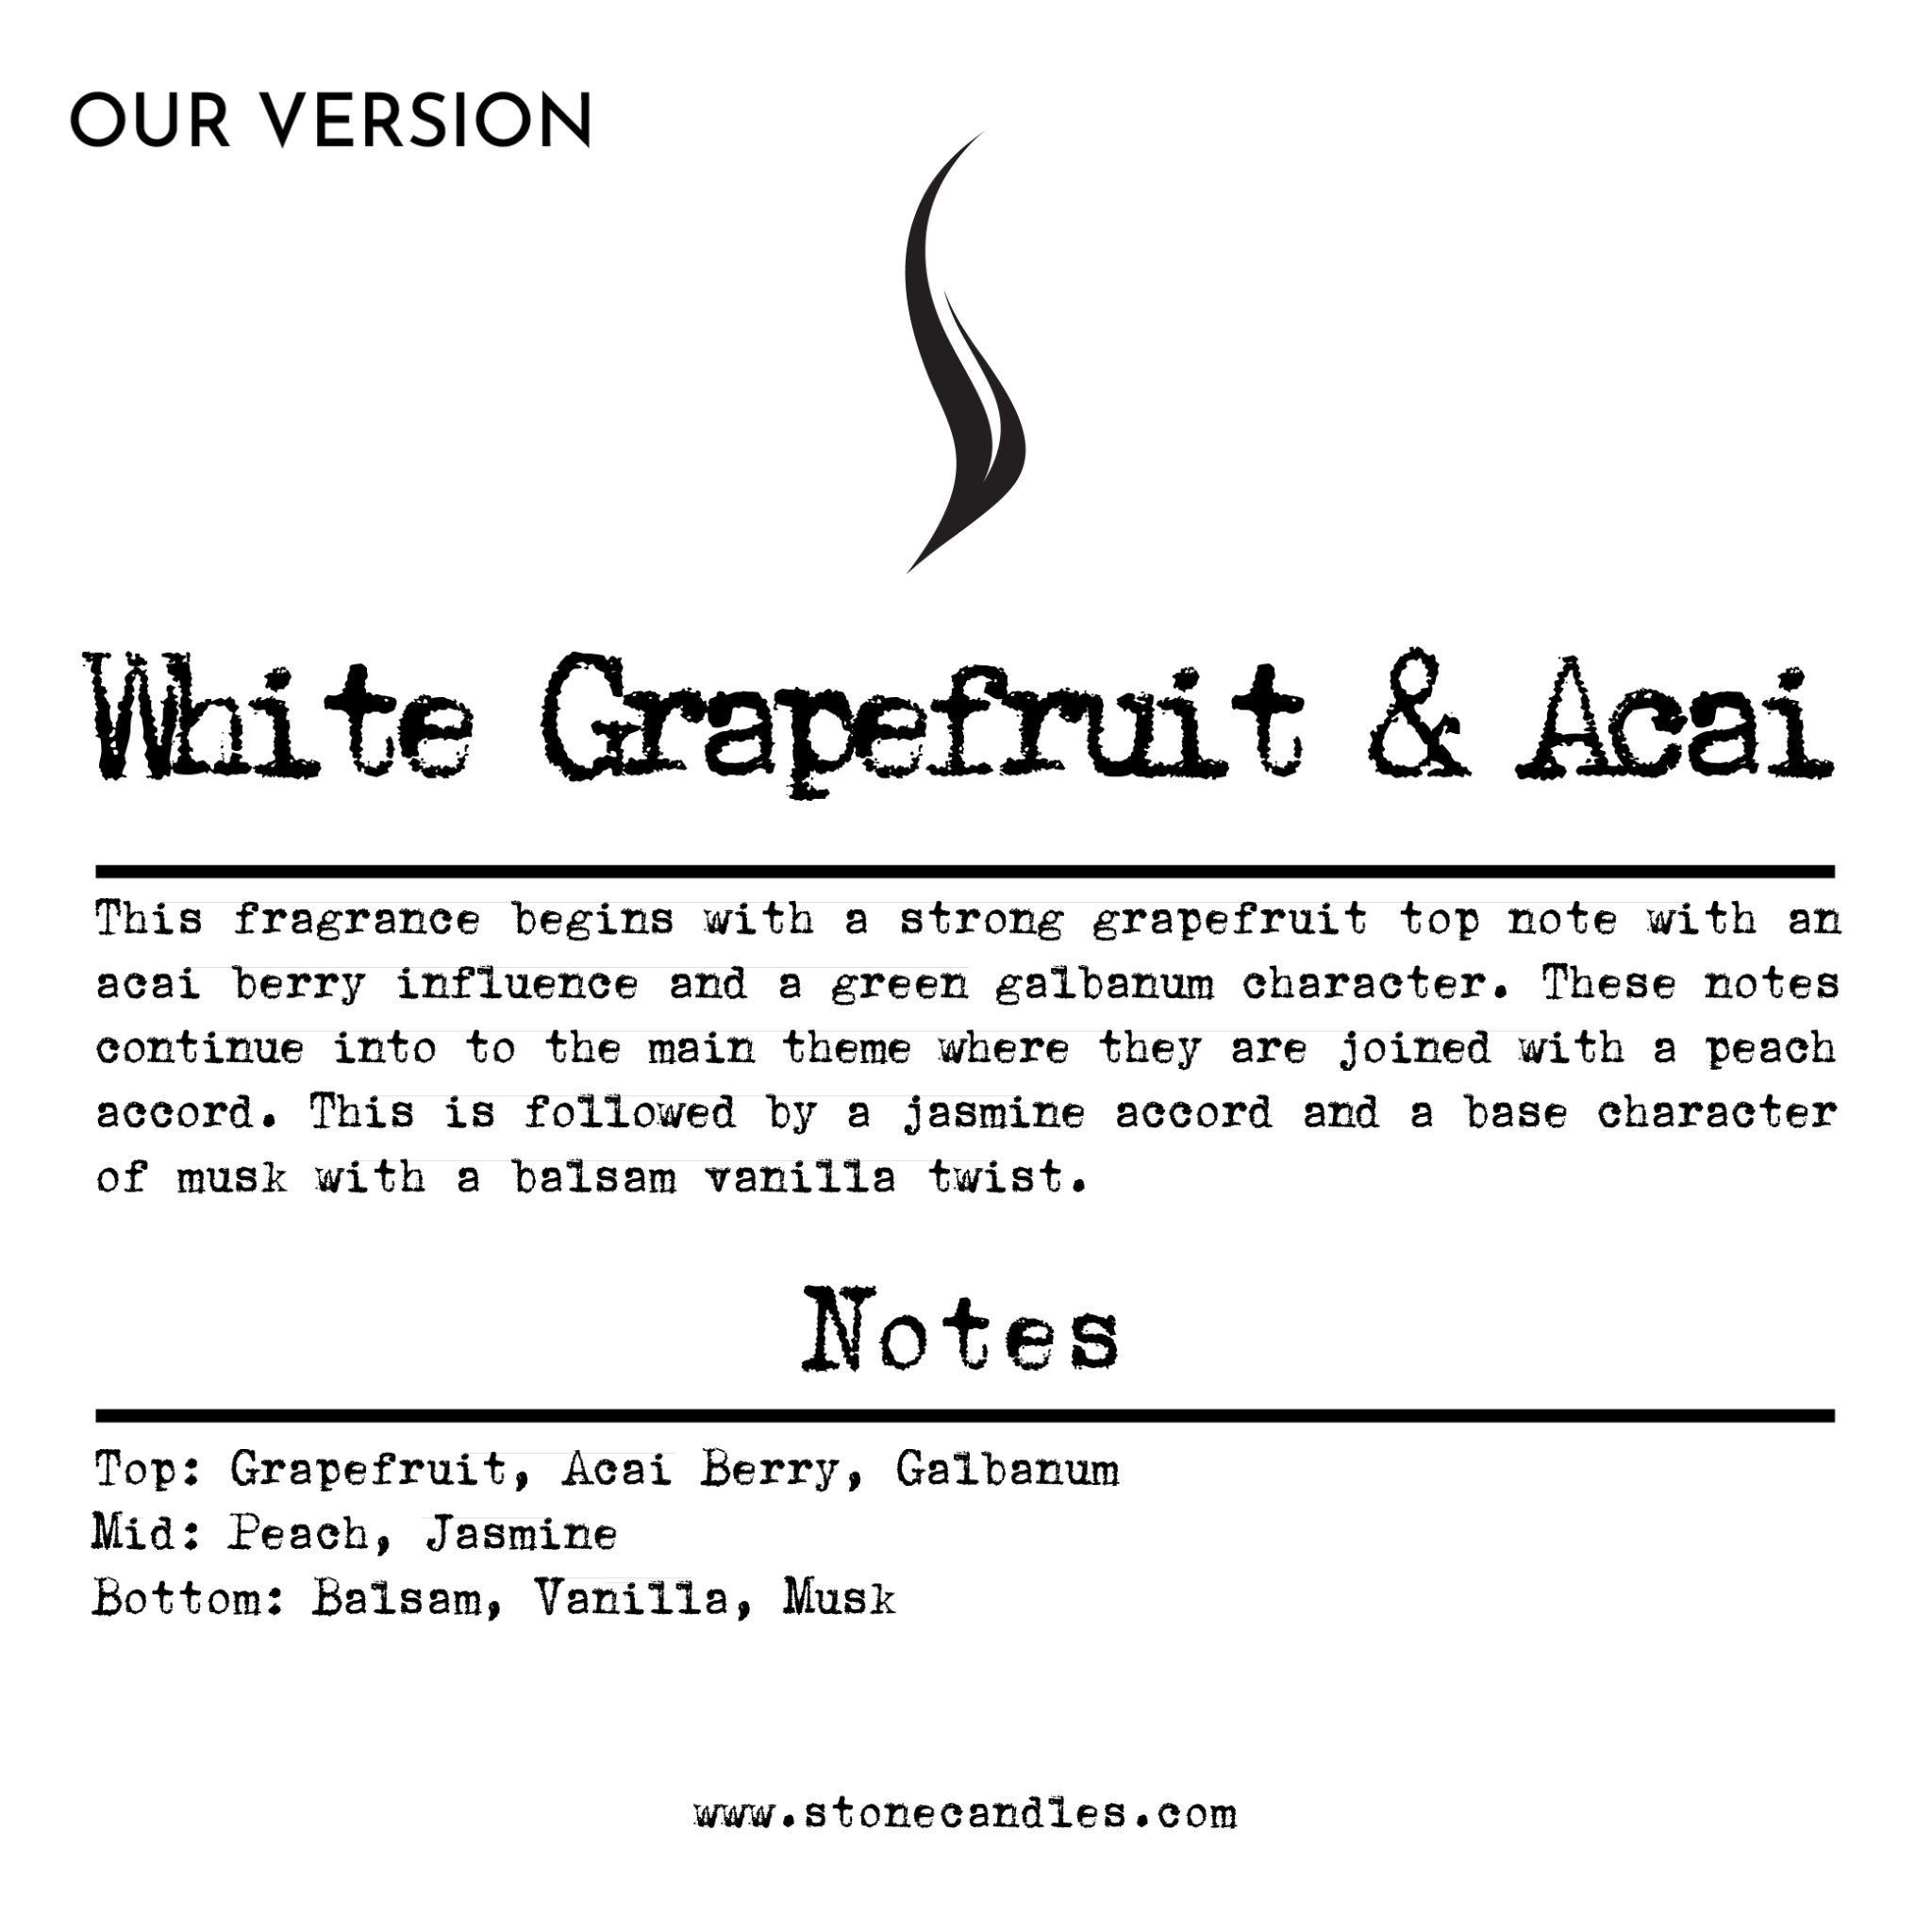 White Grapefruit & Acai (our version) Sample Scent Strip